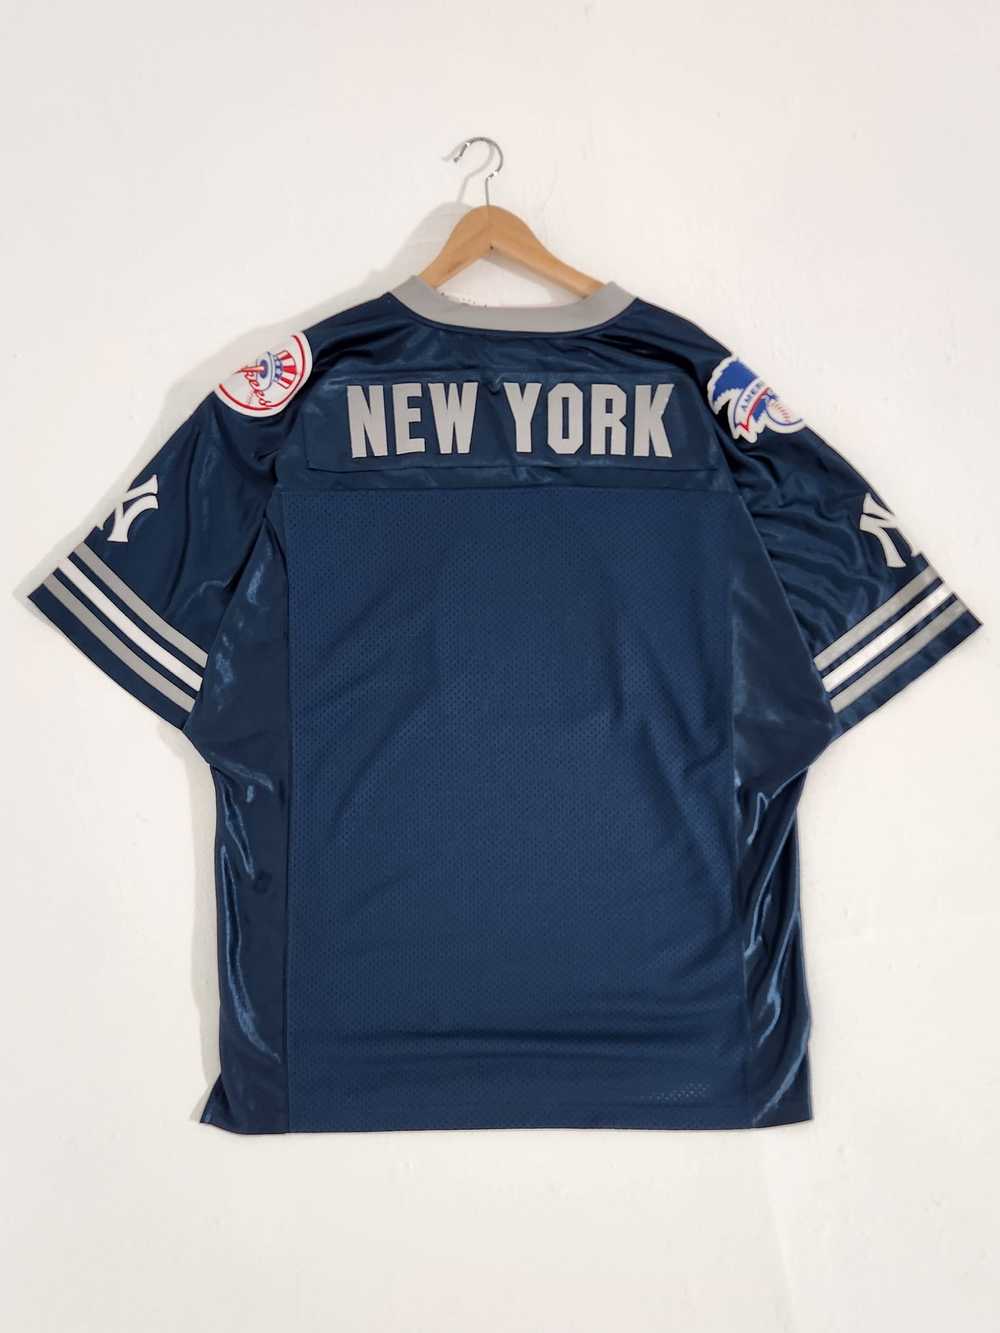 Vintage 1990's New York Yankees Lee Football Jers… - image 6